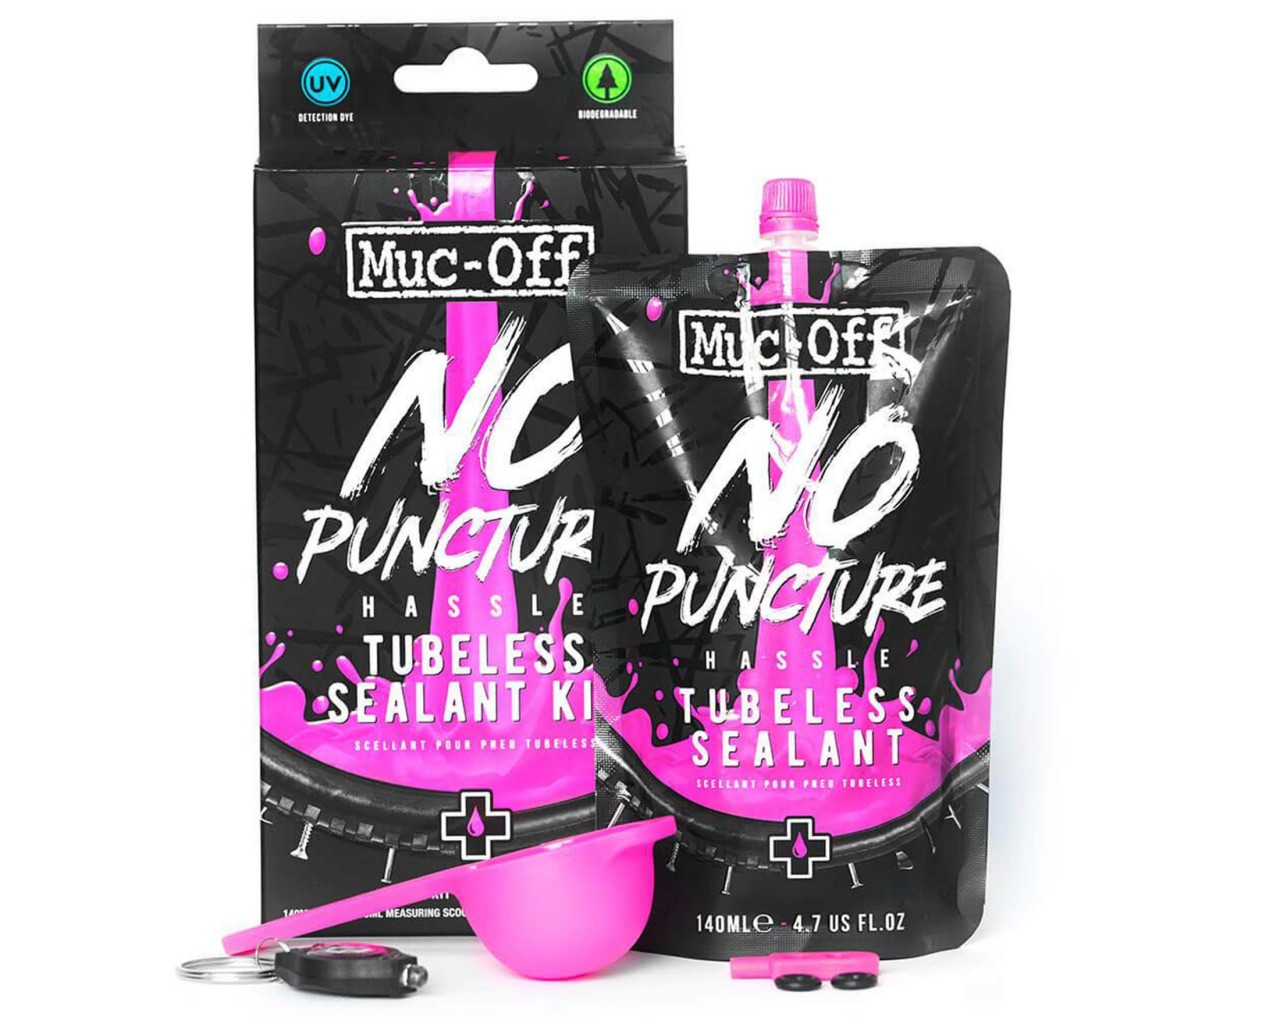 Muc Off - No Puncture Hassle Tubeless Reifendichtmittel set 140 ml